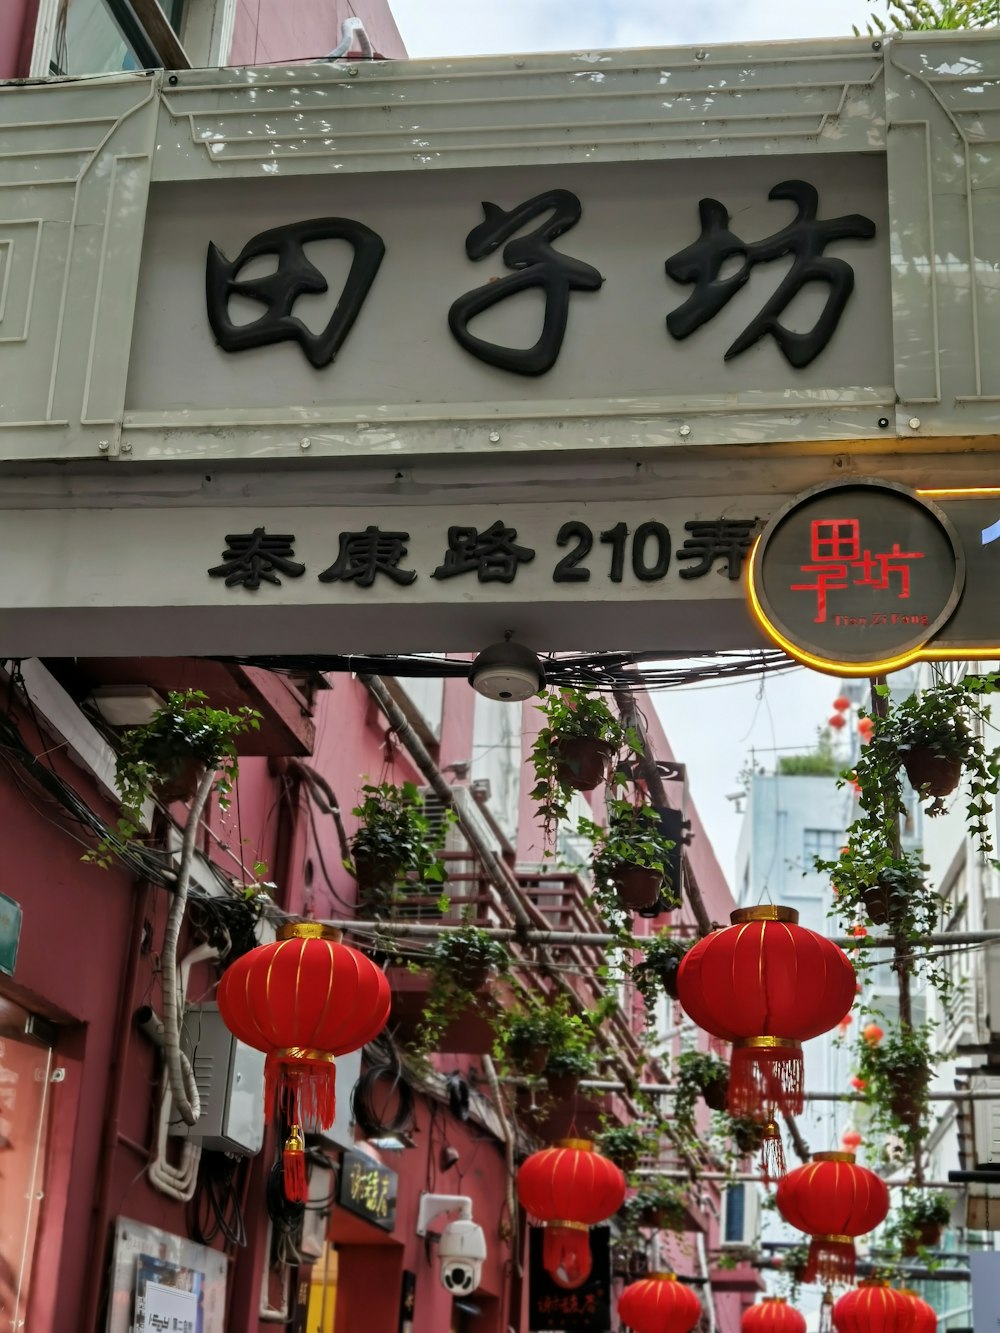 red chinese lanterns hanging on the street during daytime